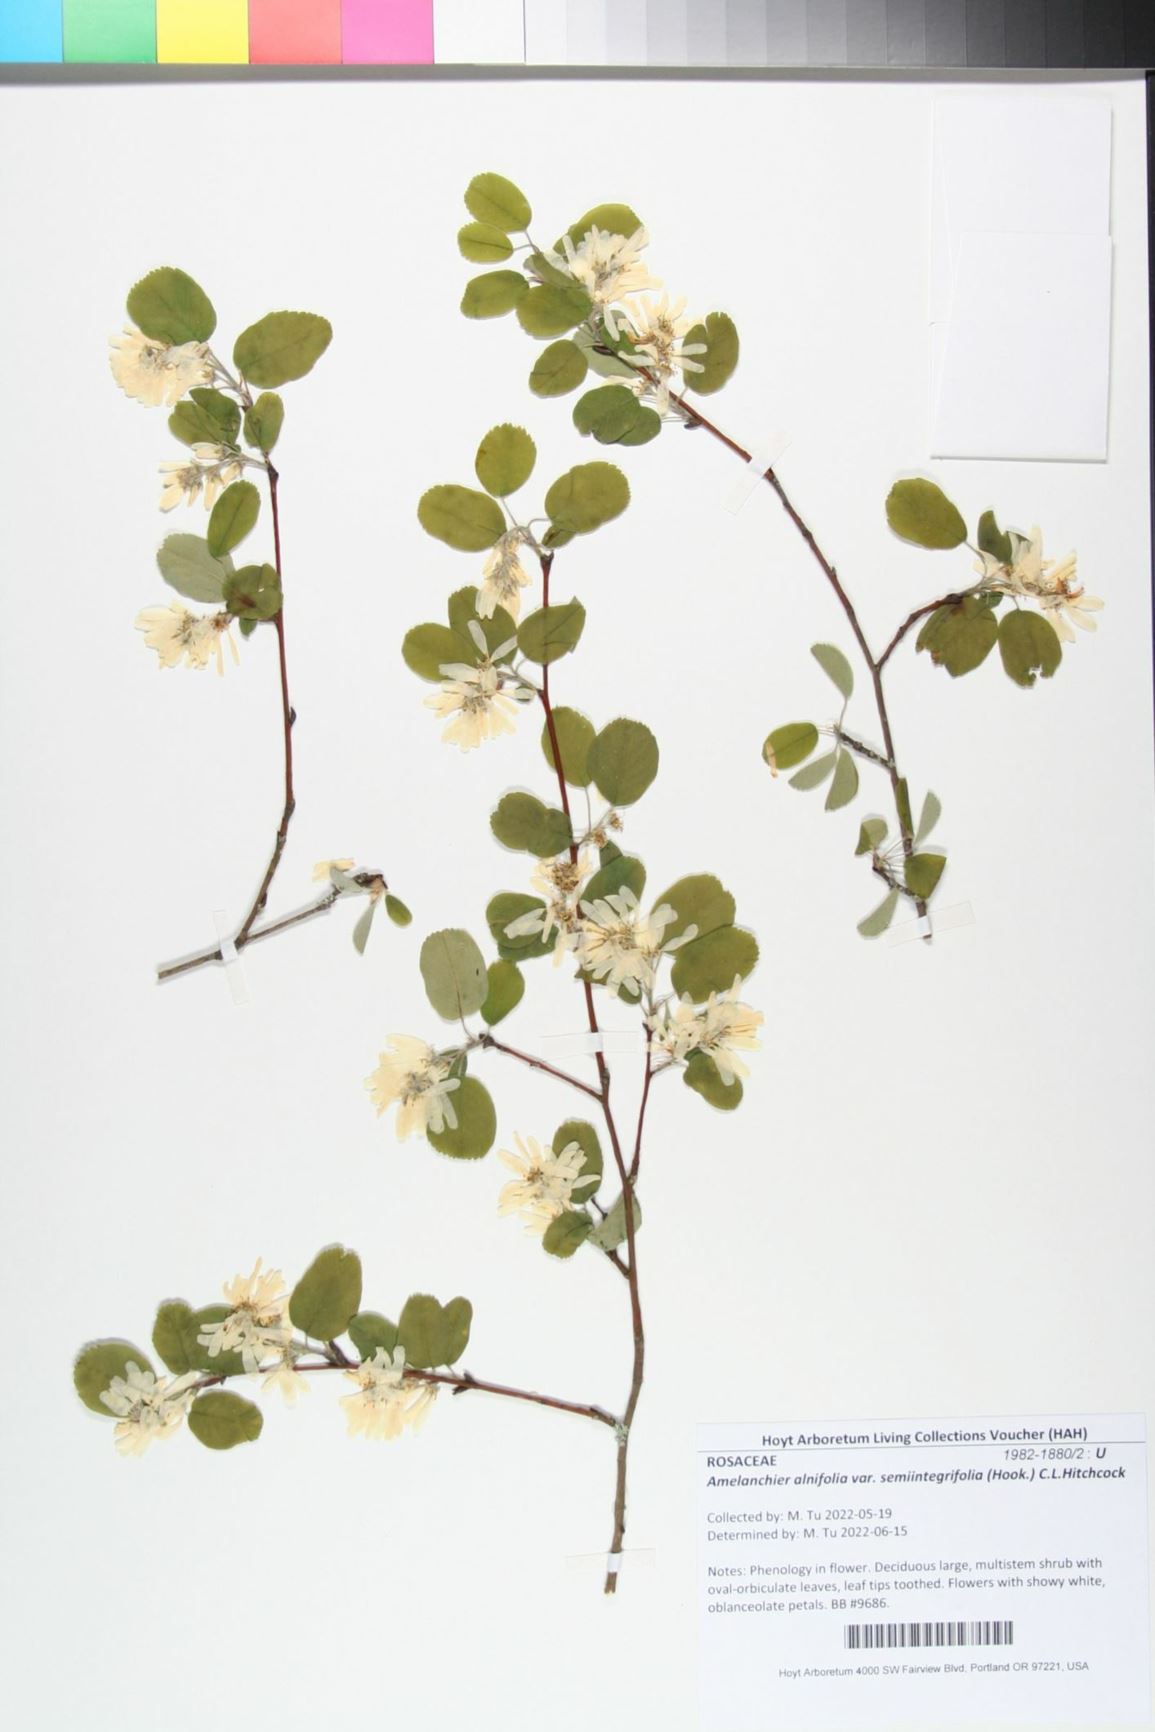 Amelanchier alnifolia var. semiintegrifolia - Pacific serviceberry, Saskatoon serviceberry